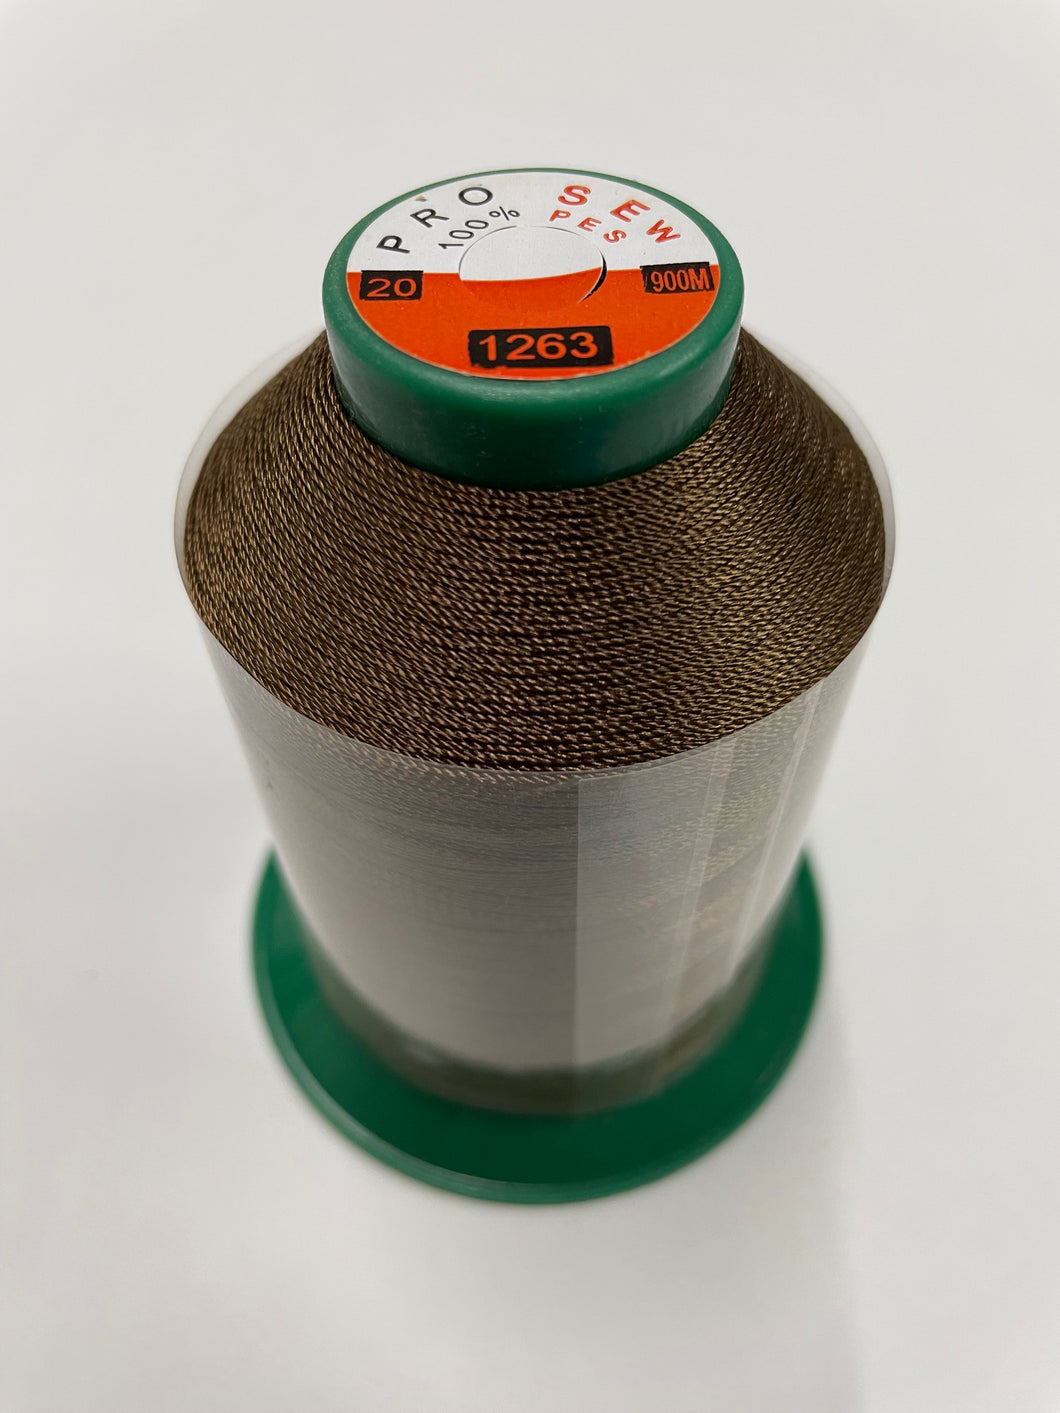 1263 - Brown M20 Polyester Thread